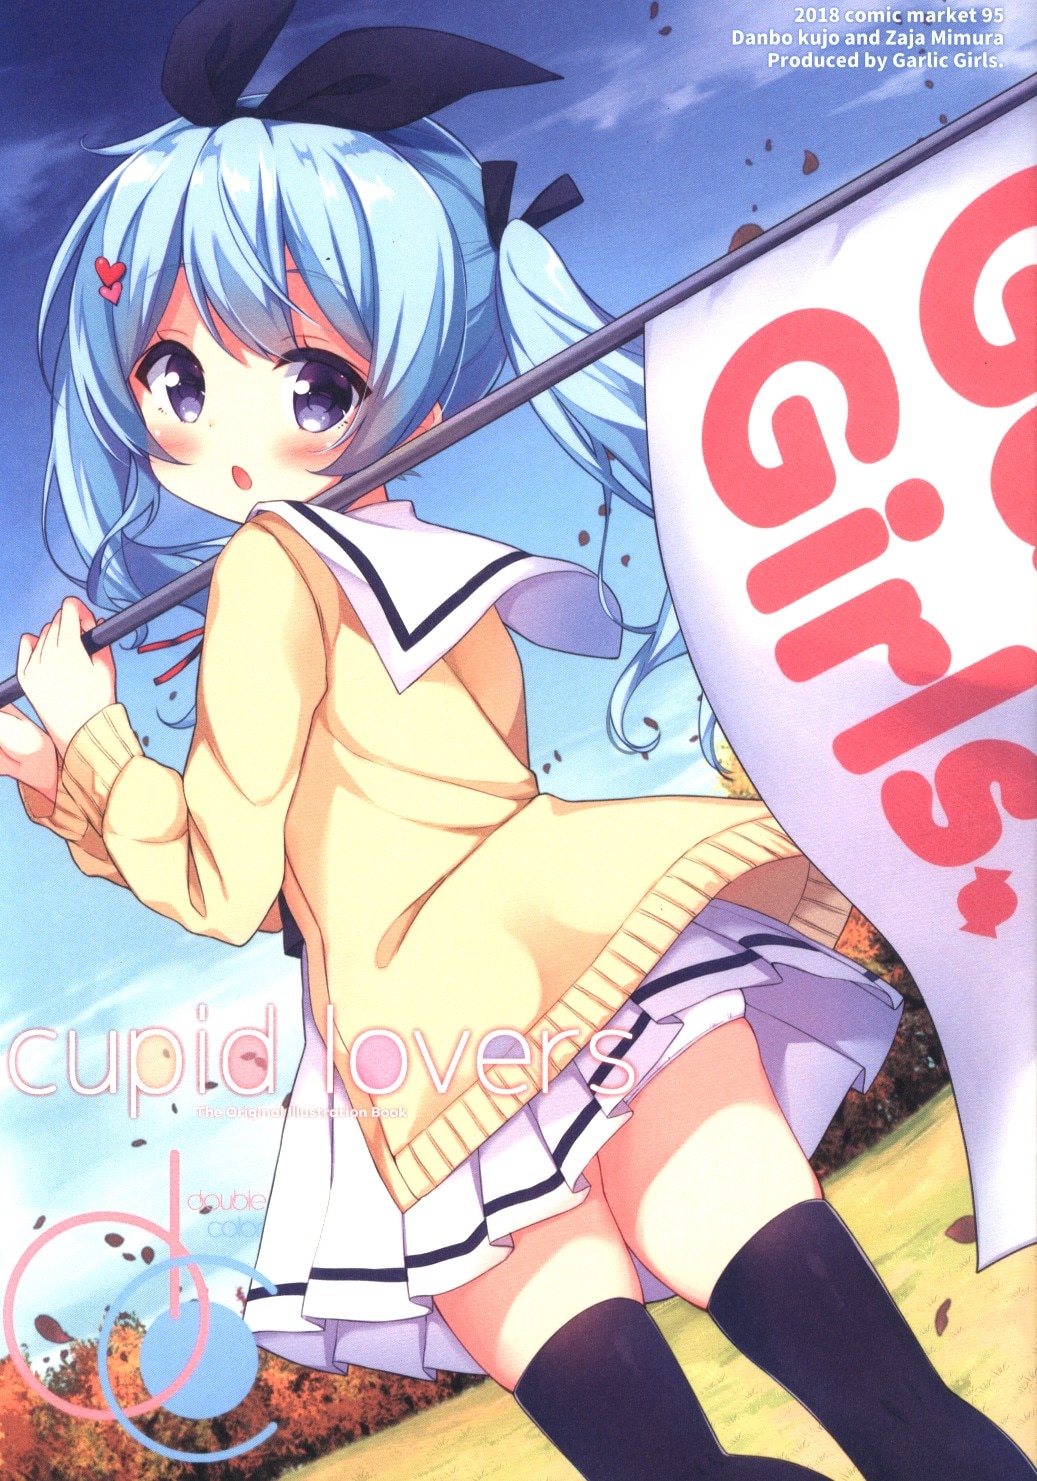 [Hentai] Doujinshi - 「オリジナル」　Cupid lovers 02 2 / Garlic Girls